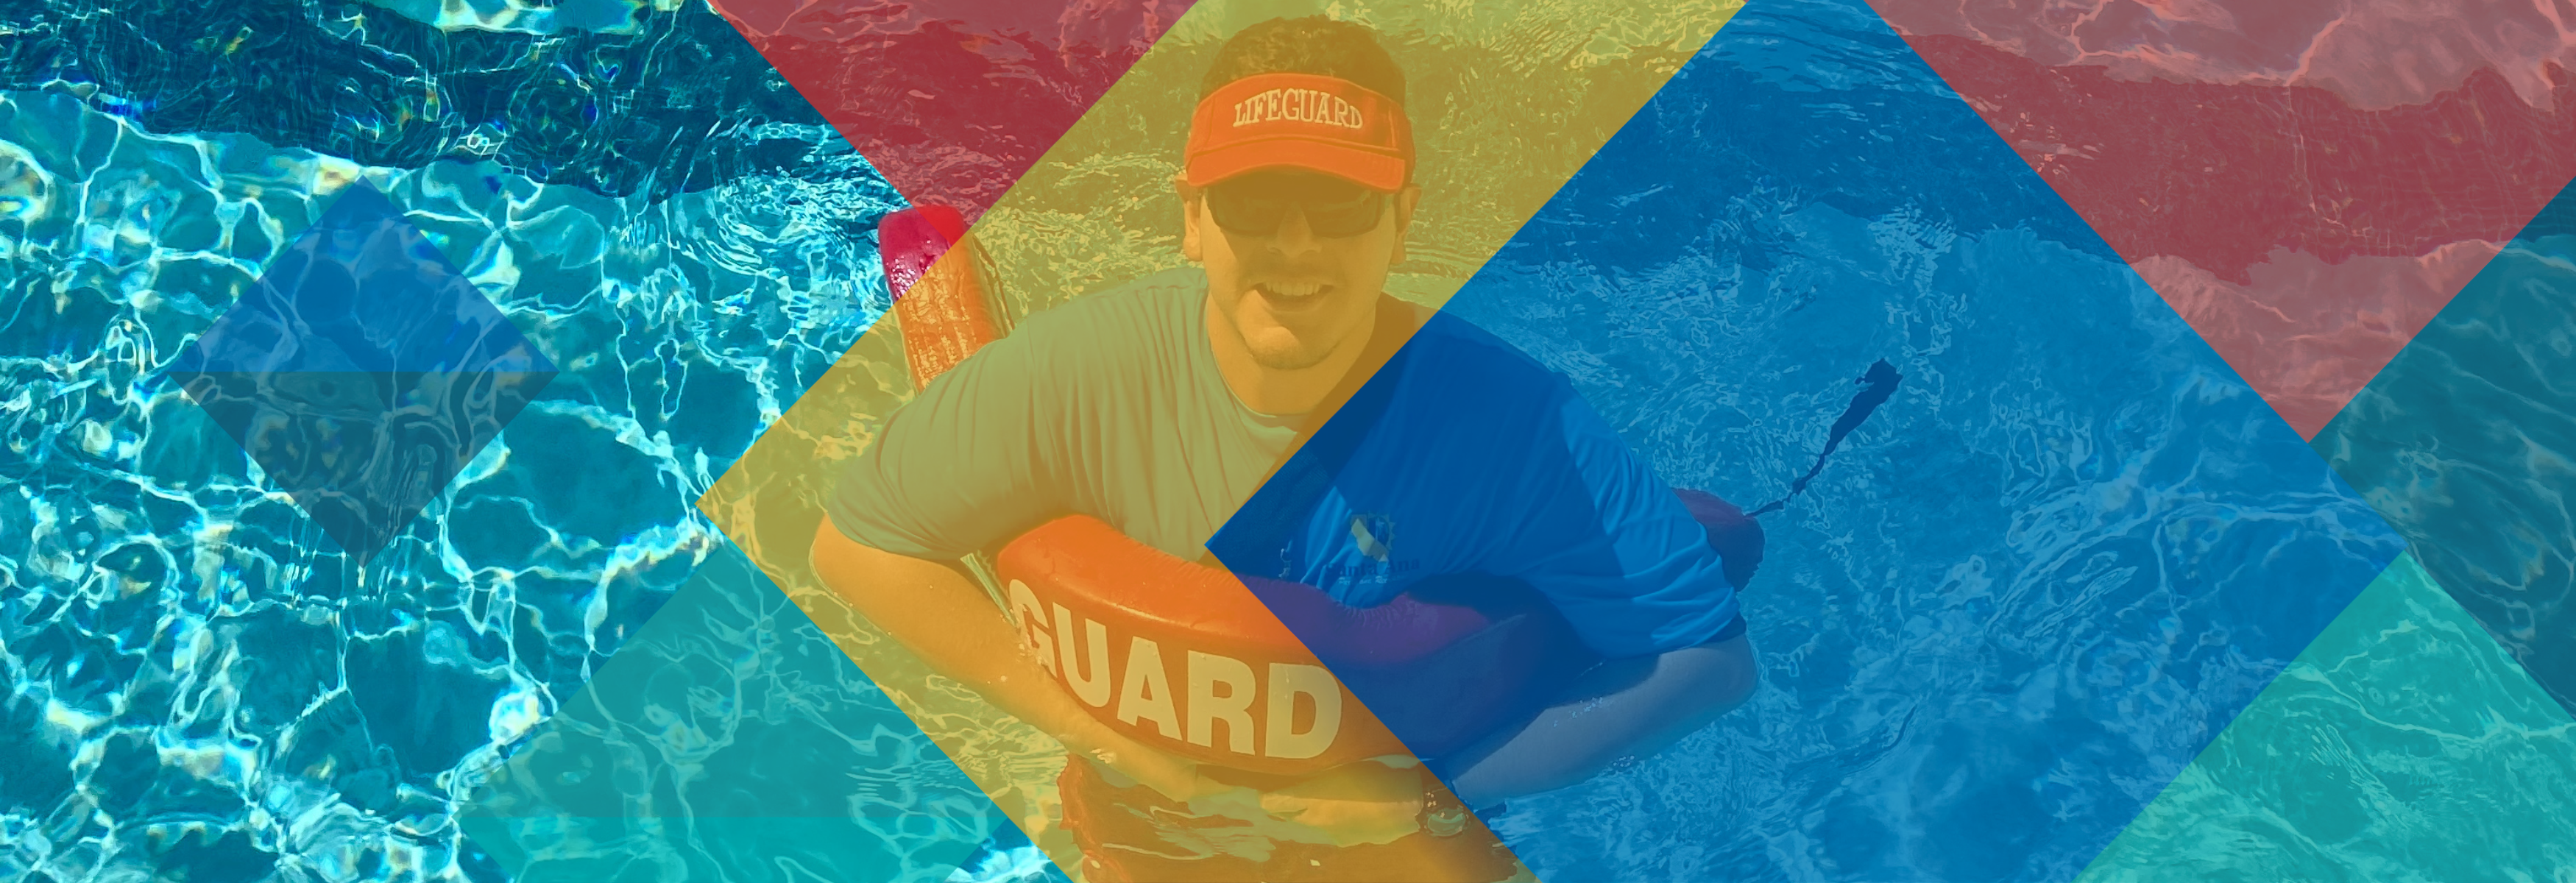 Emerging lifeguard leaders image